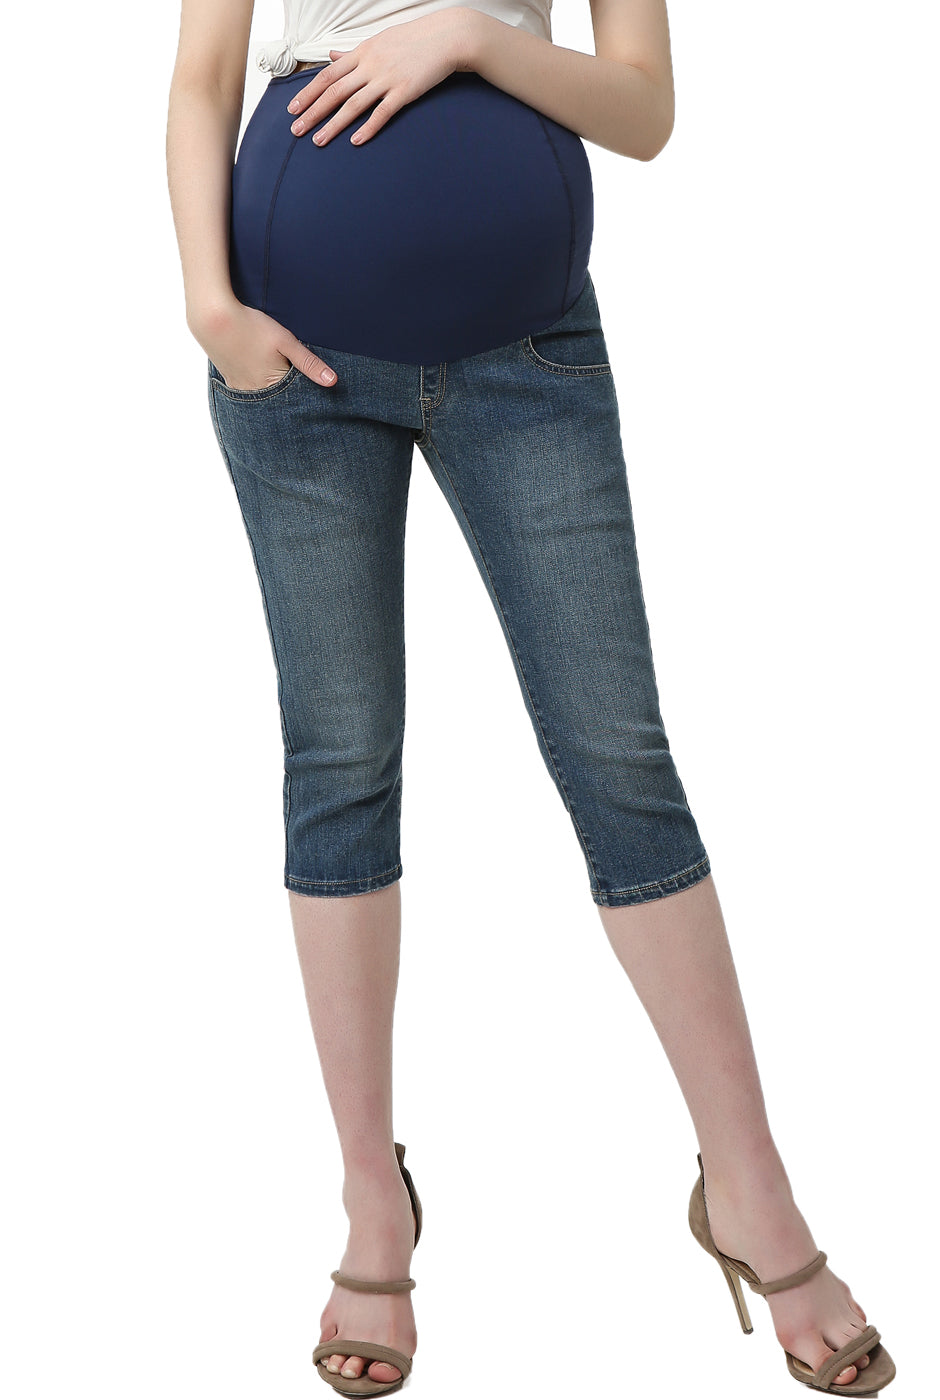 Lane Bryant Capri Jeans Women Size 14 Blue Genius Fit Mid Rise Stretch Denim  | eBay